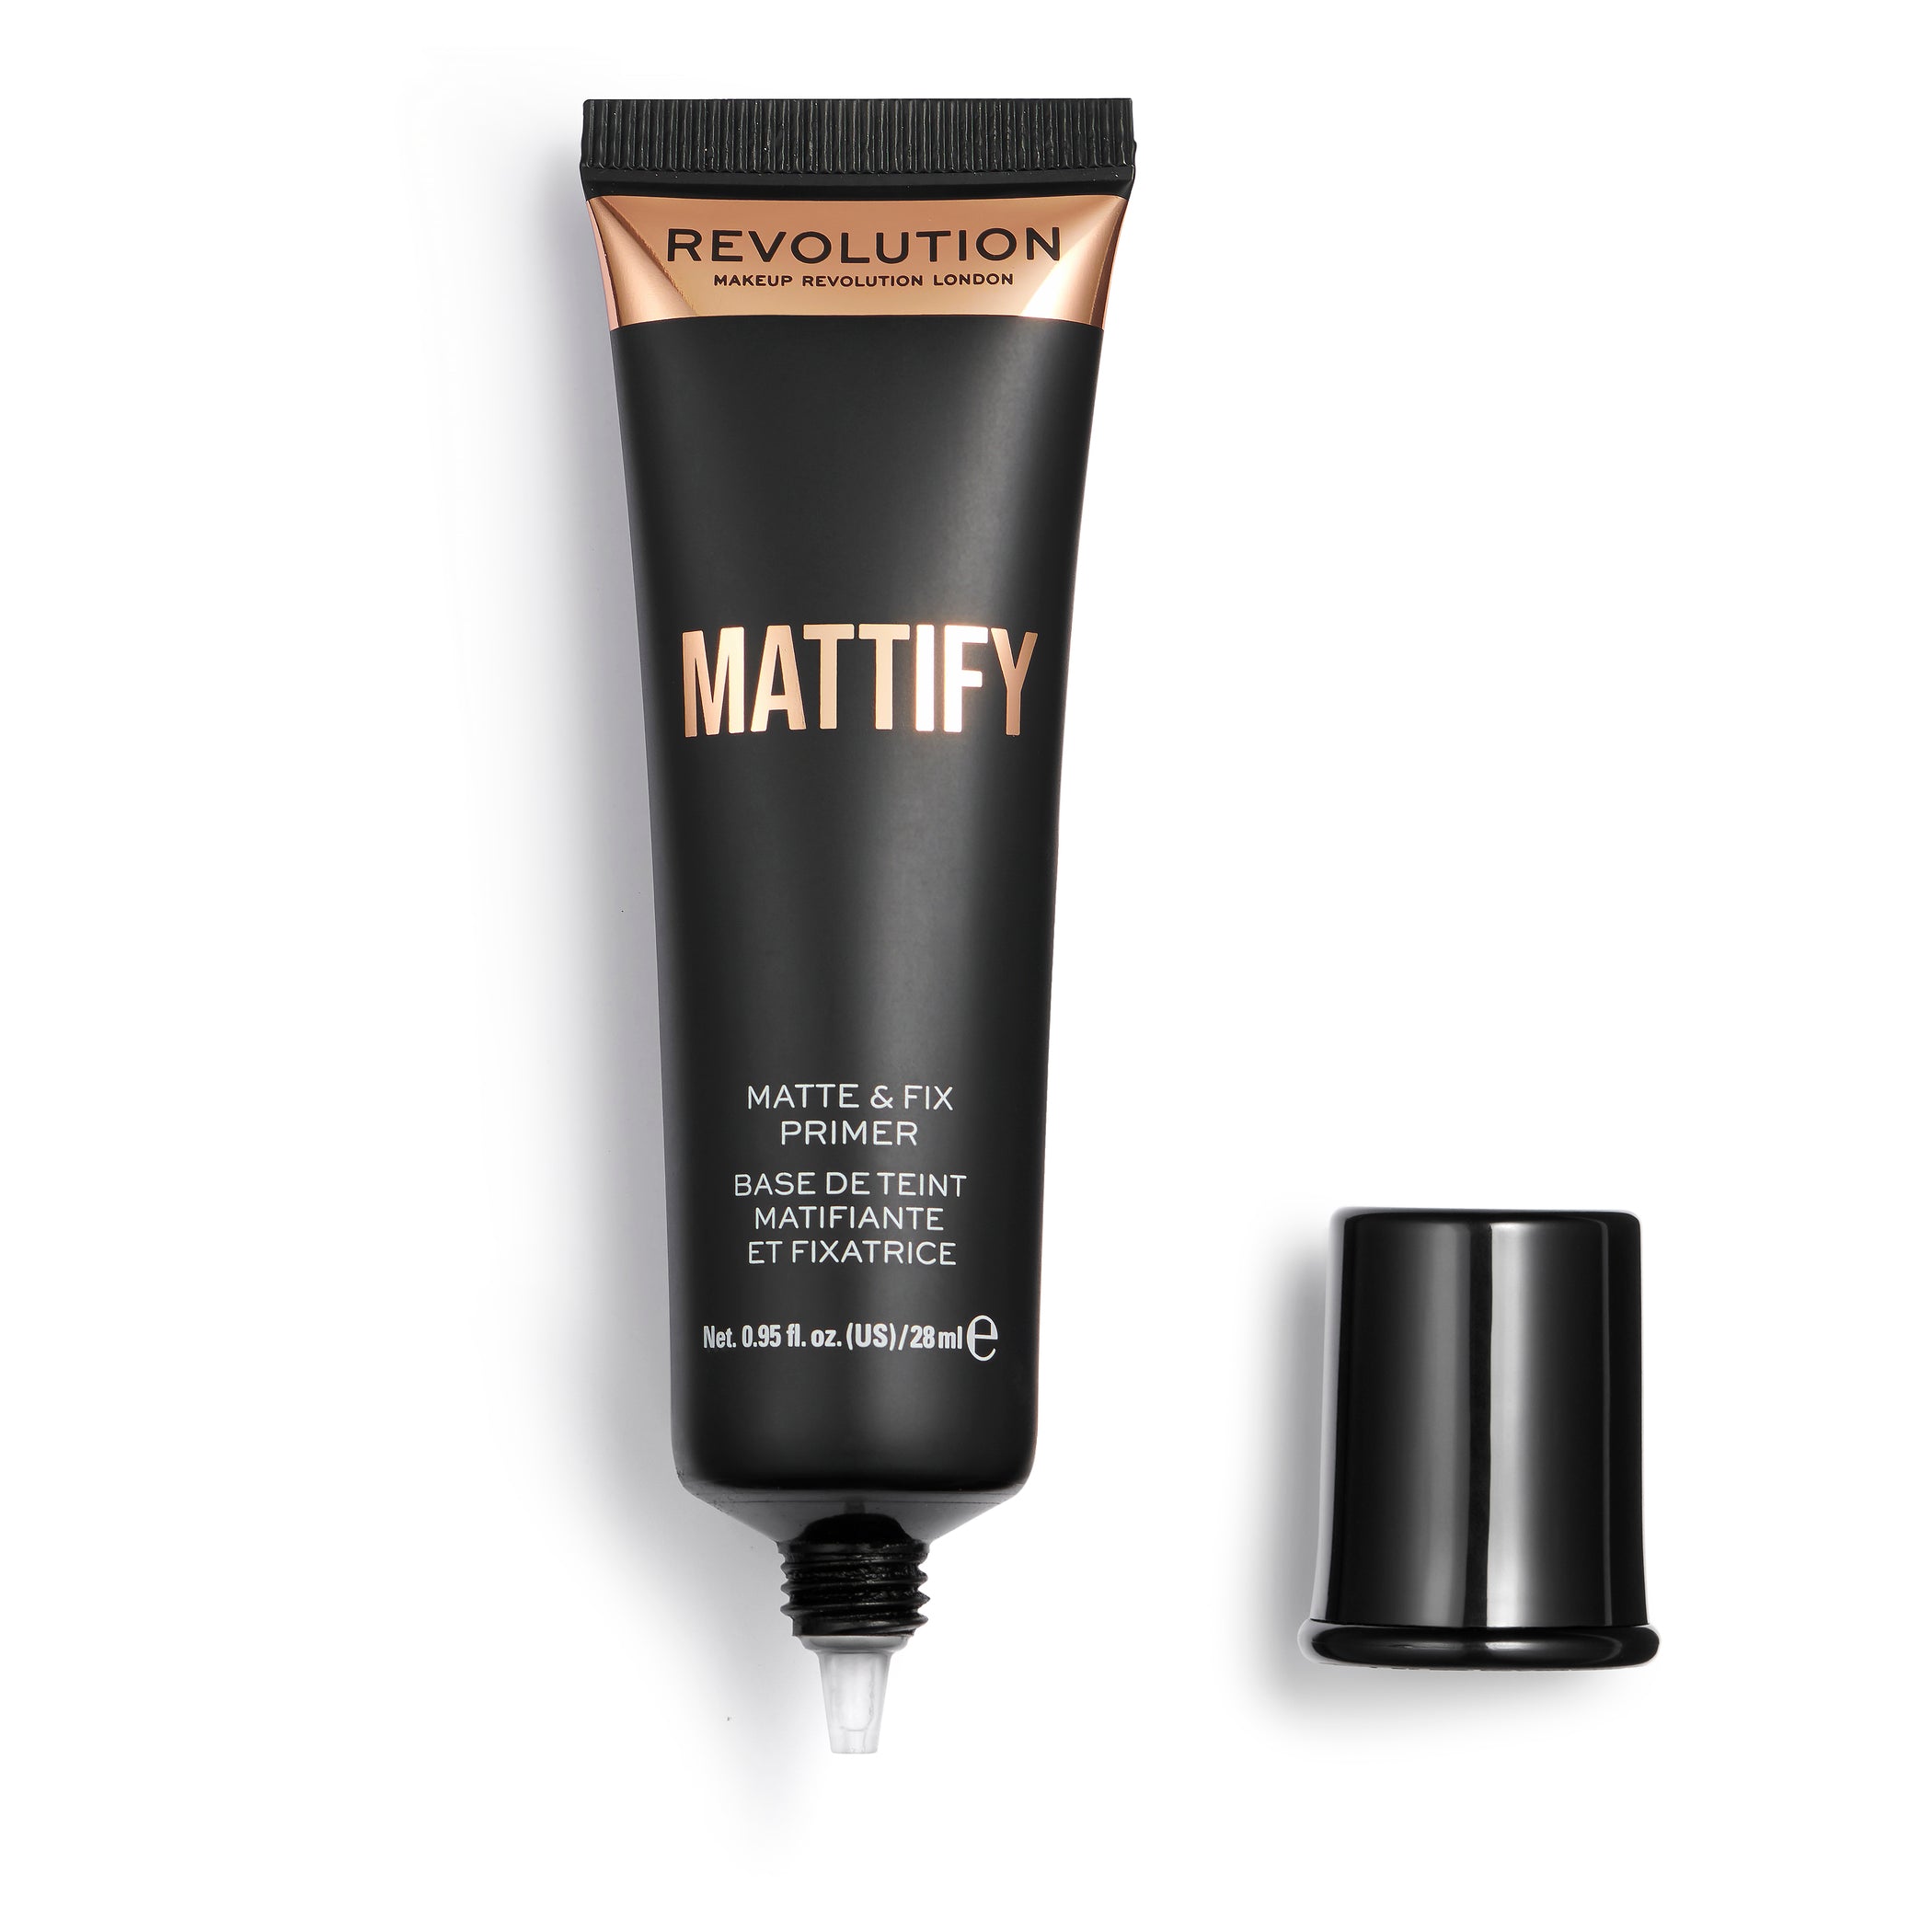 Makeup Revolution Mattify Primer